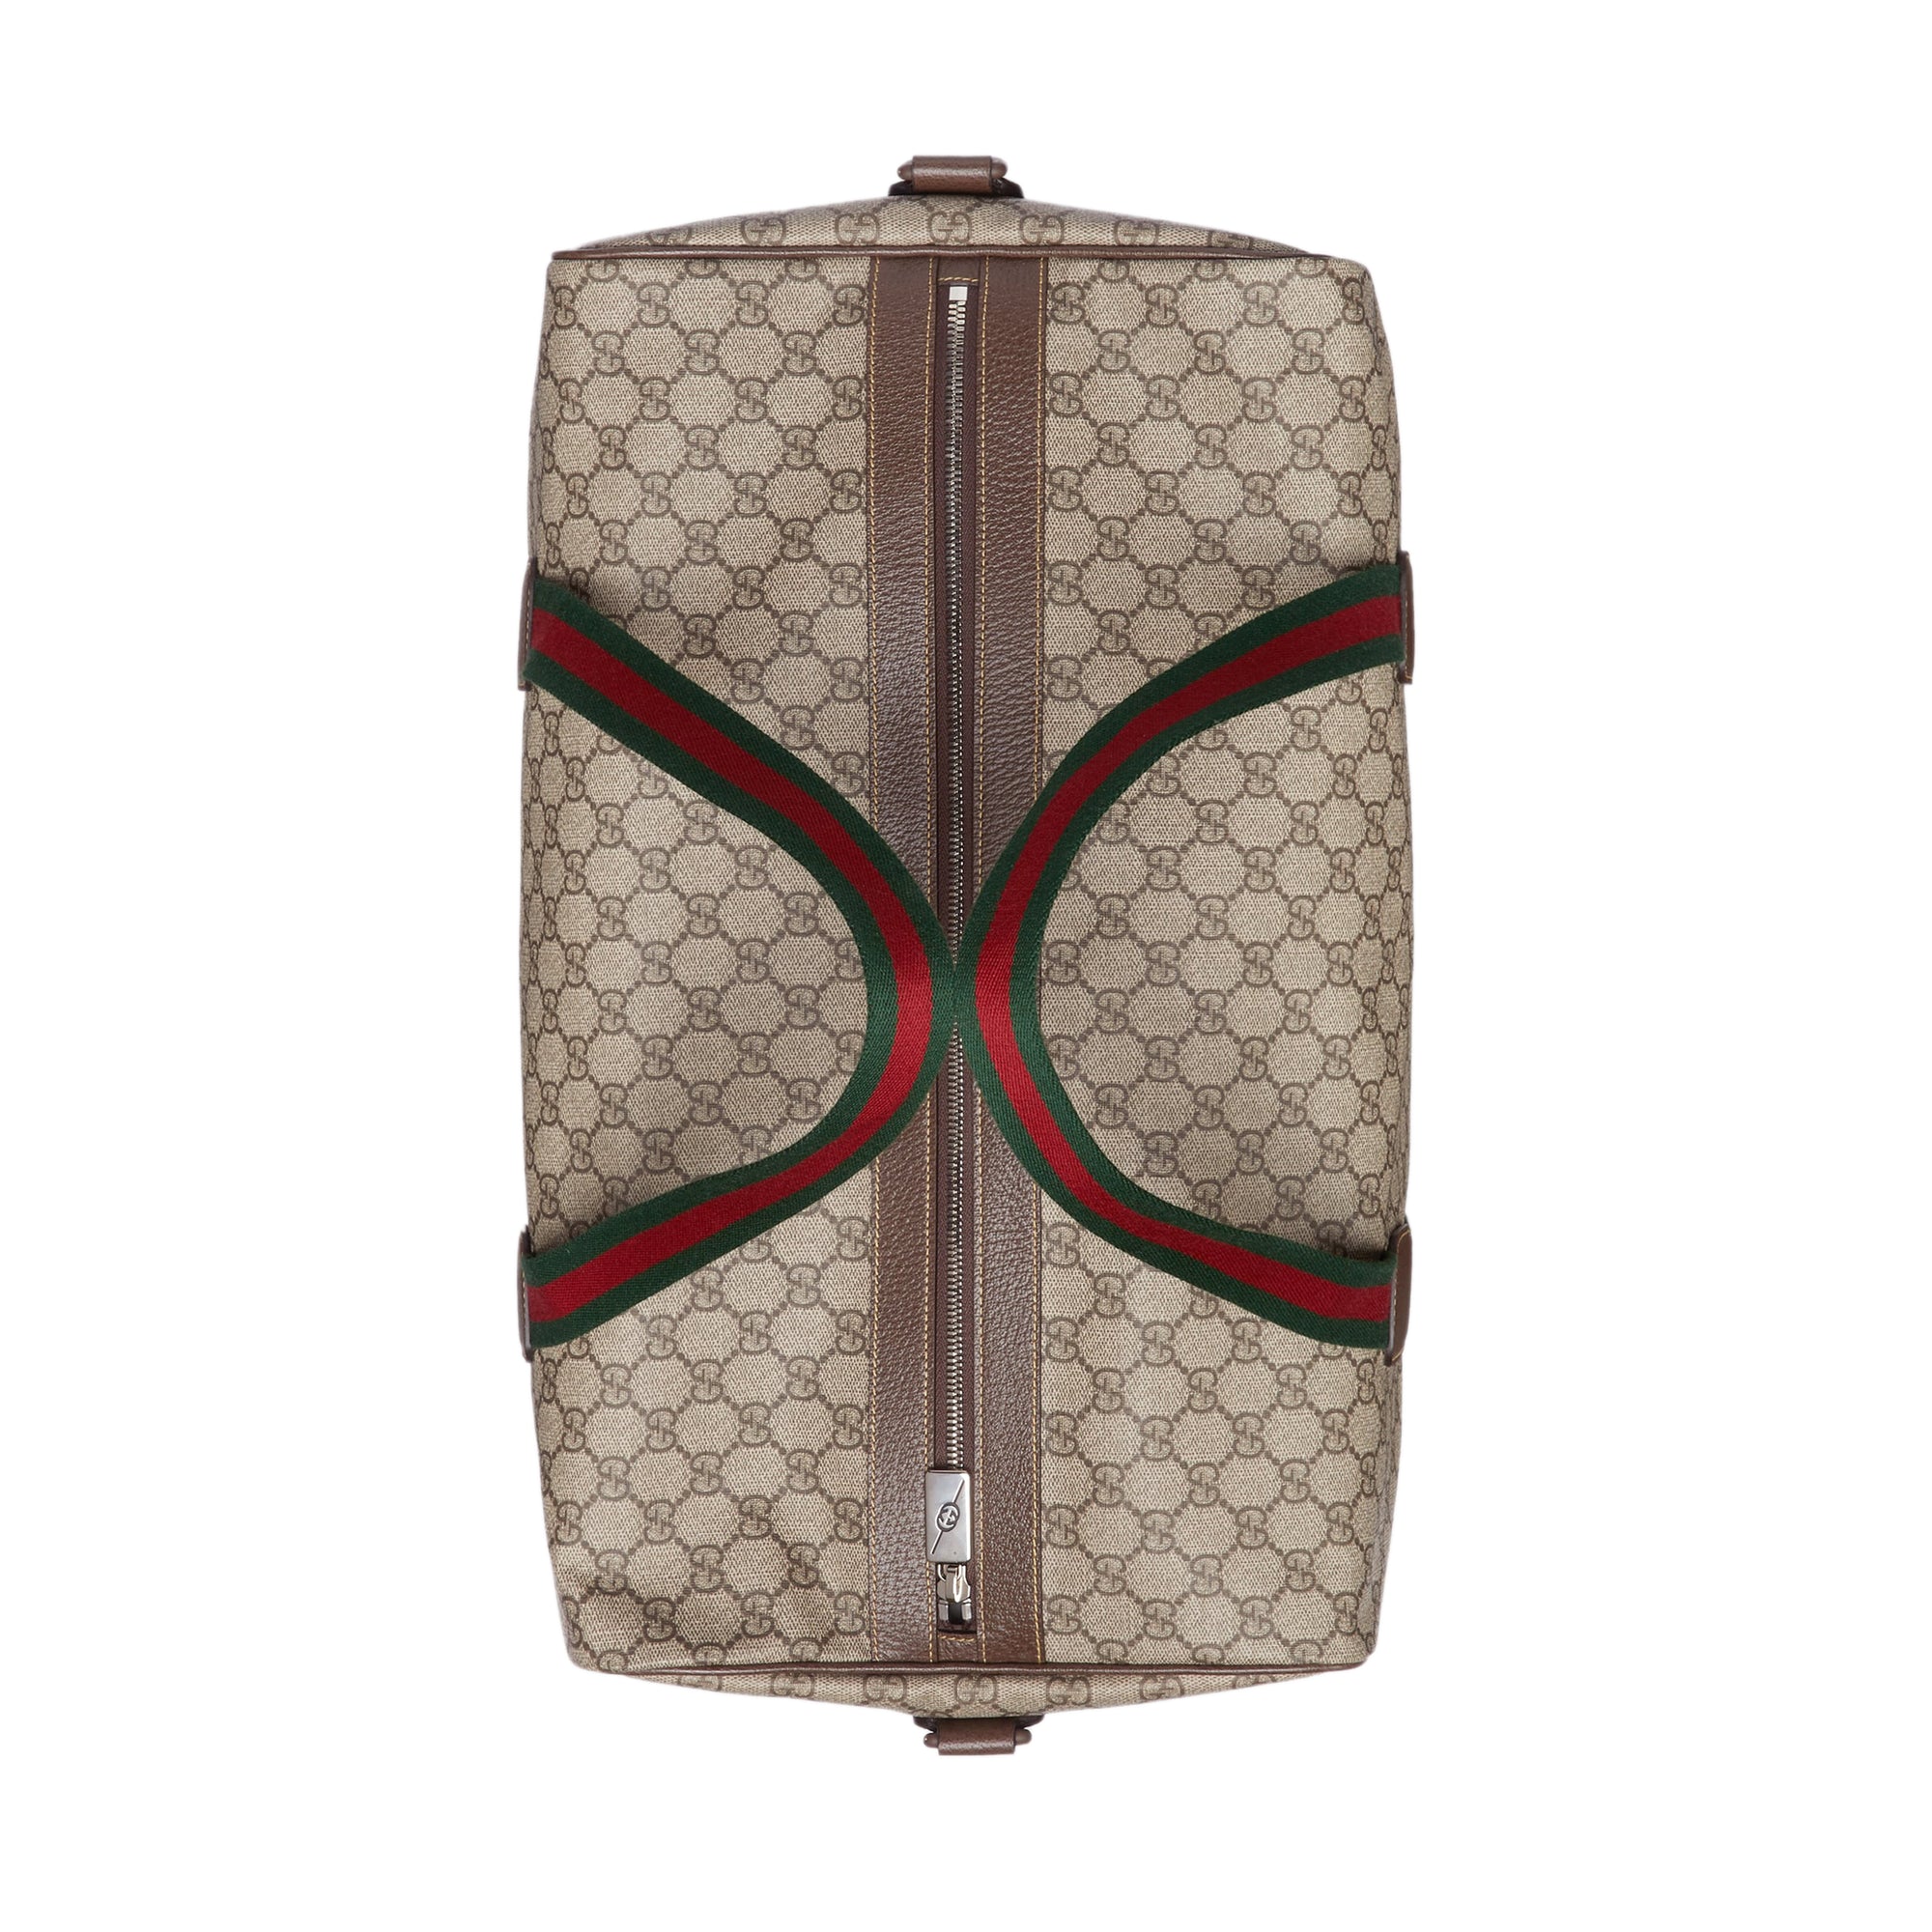 Gucci - Men’s Large Duffle Bag With Web - (Beige/Ebony) view 4